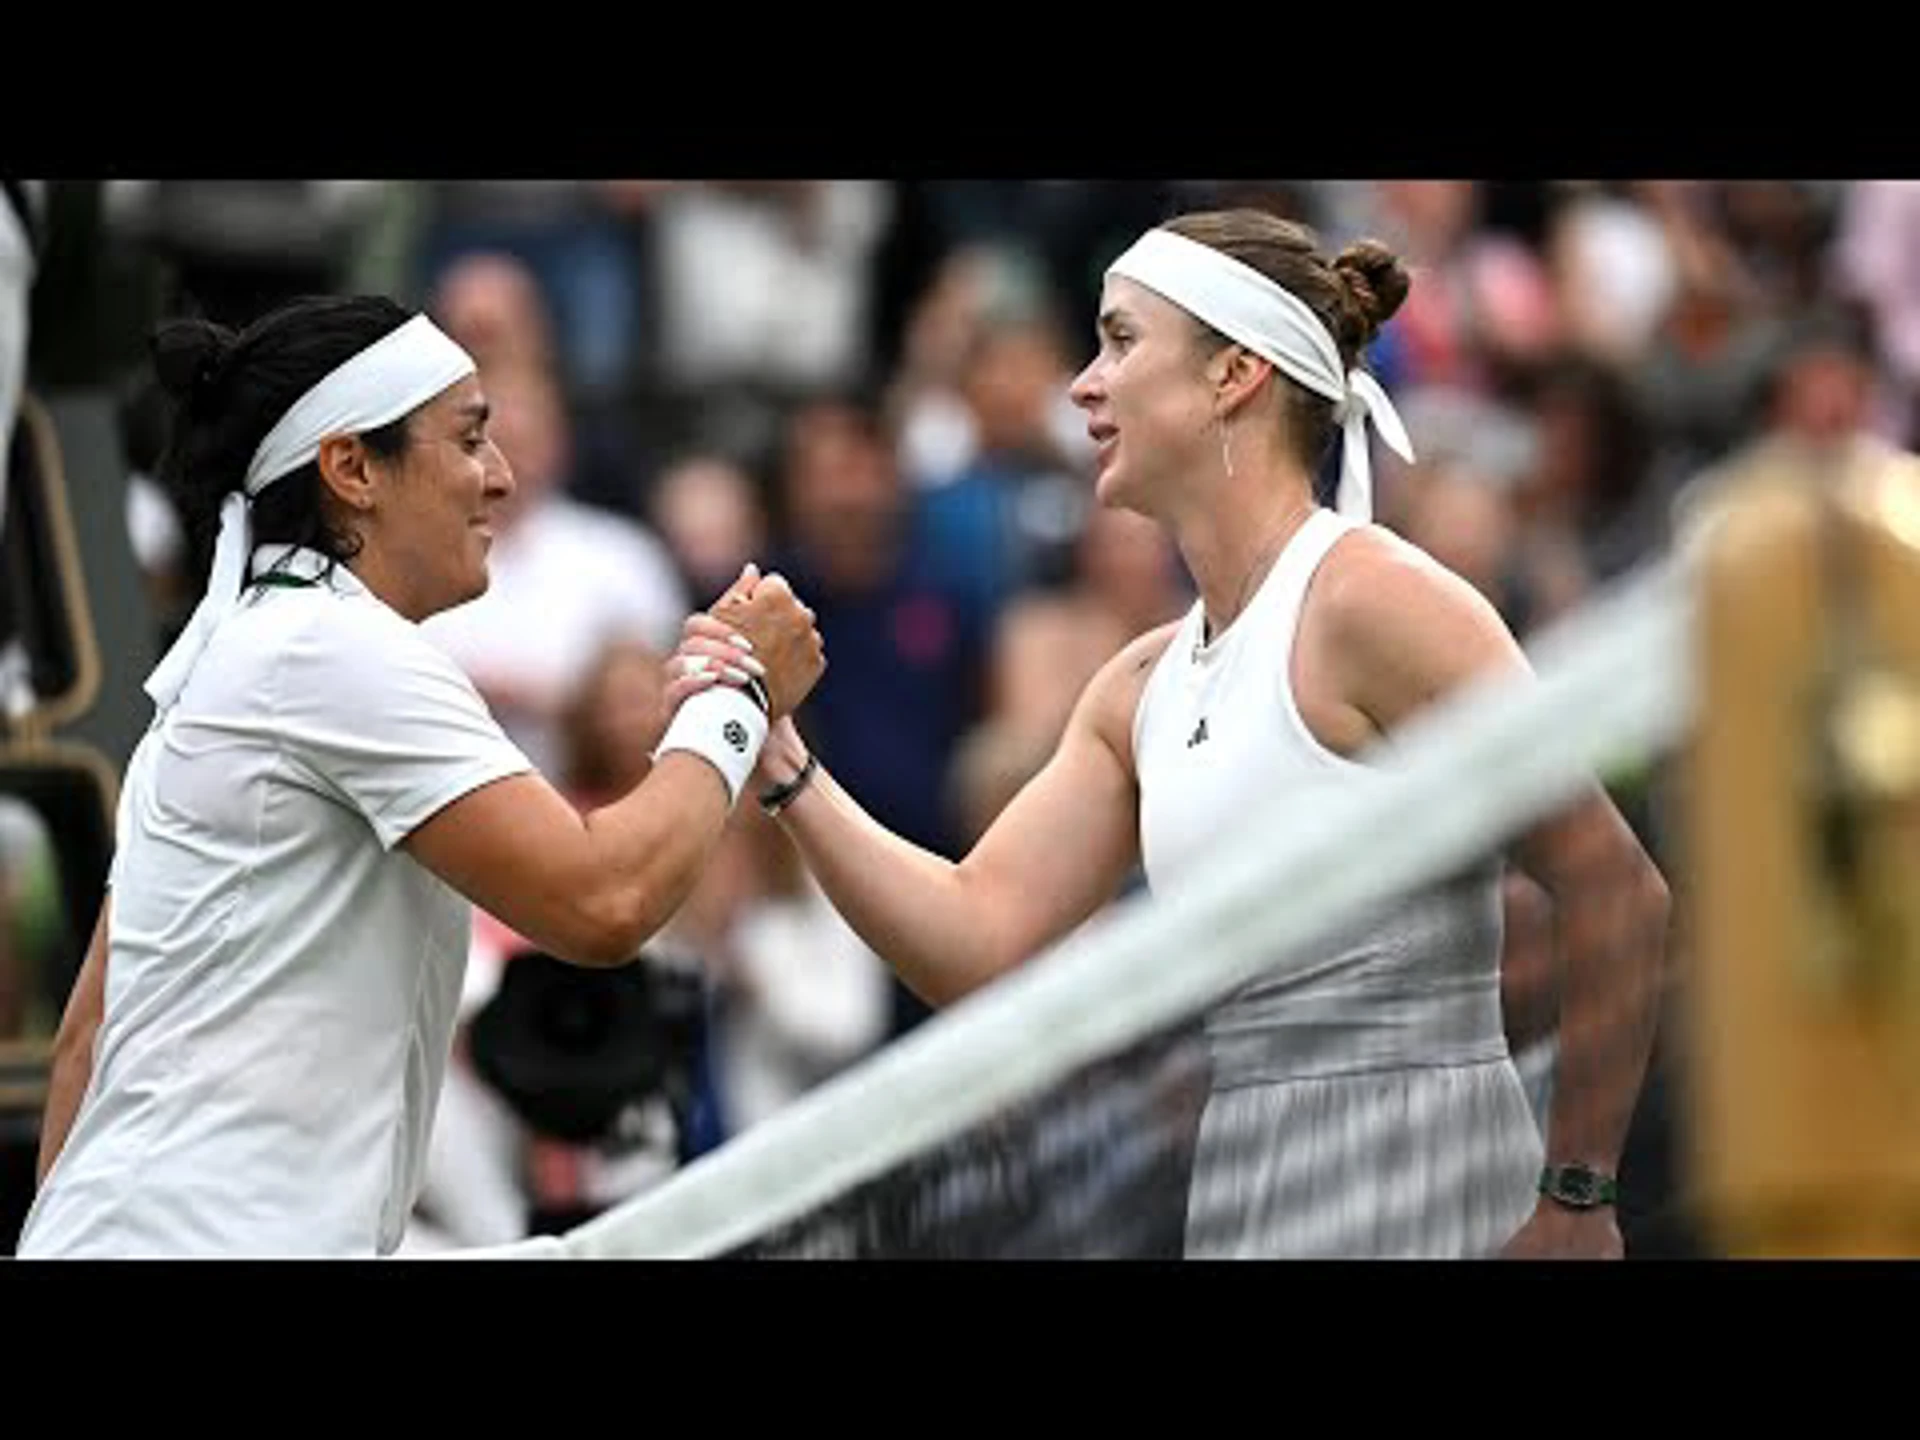 Ons Jabeur v Elina Svitolina | Women's singles | 3rd Round | Highlights | Wimbledon